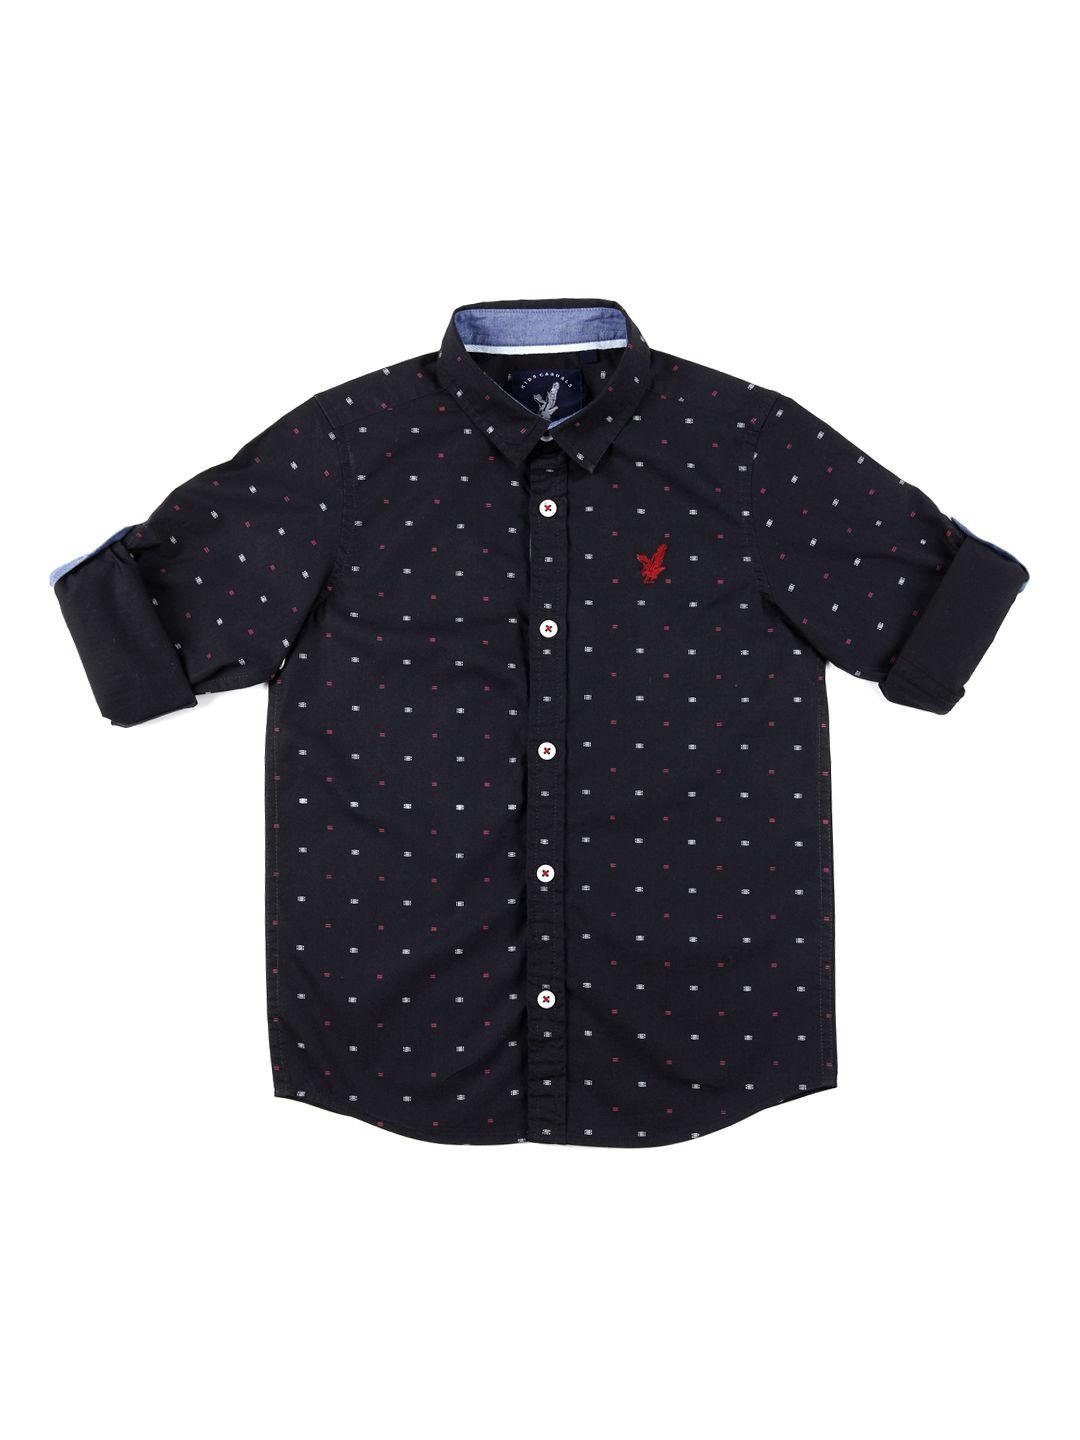 urban scottish boys black standard regular fit printed casual shirt